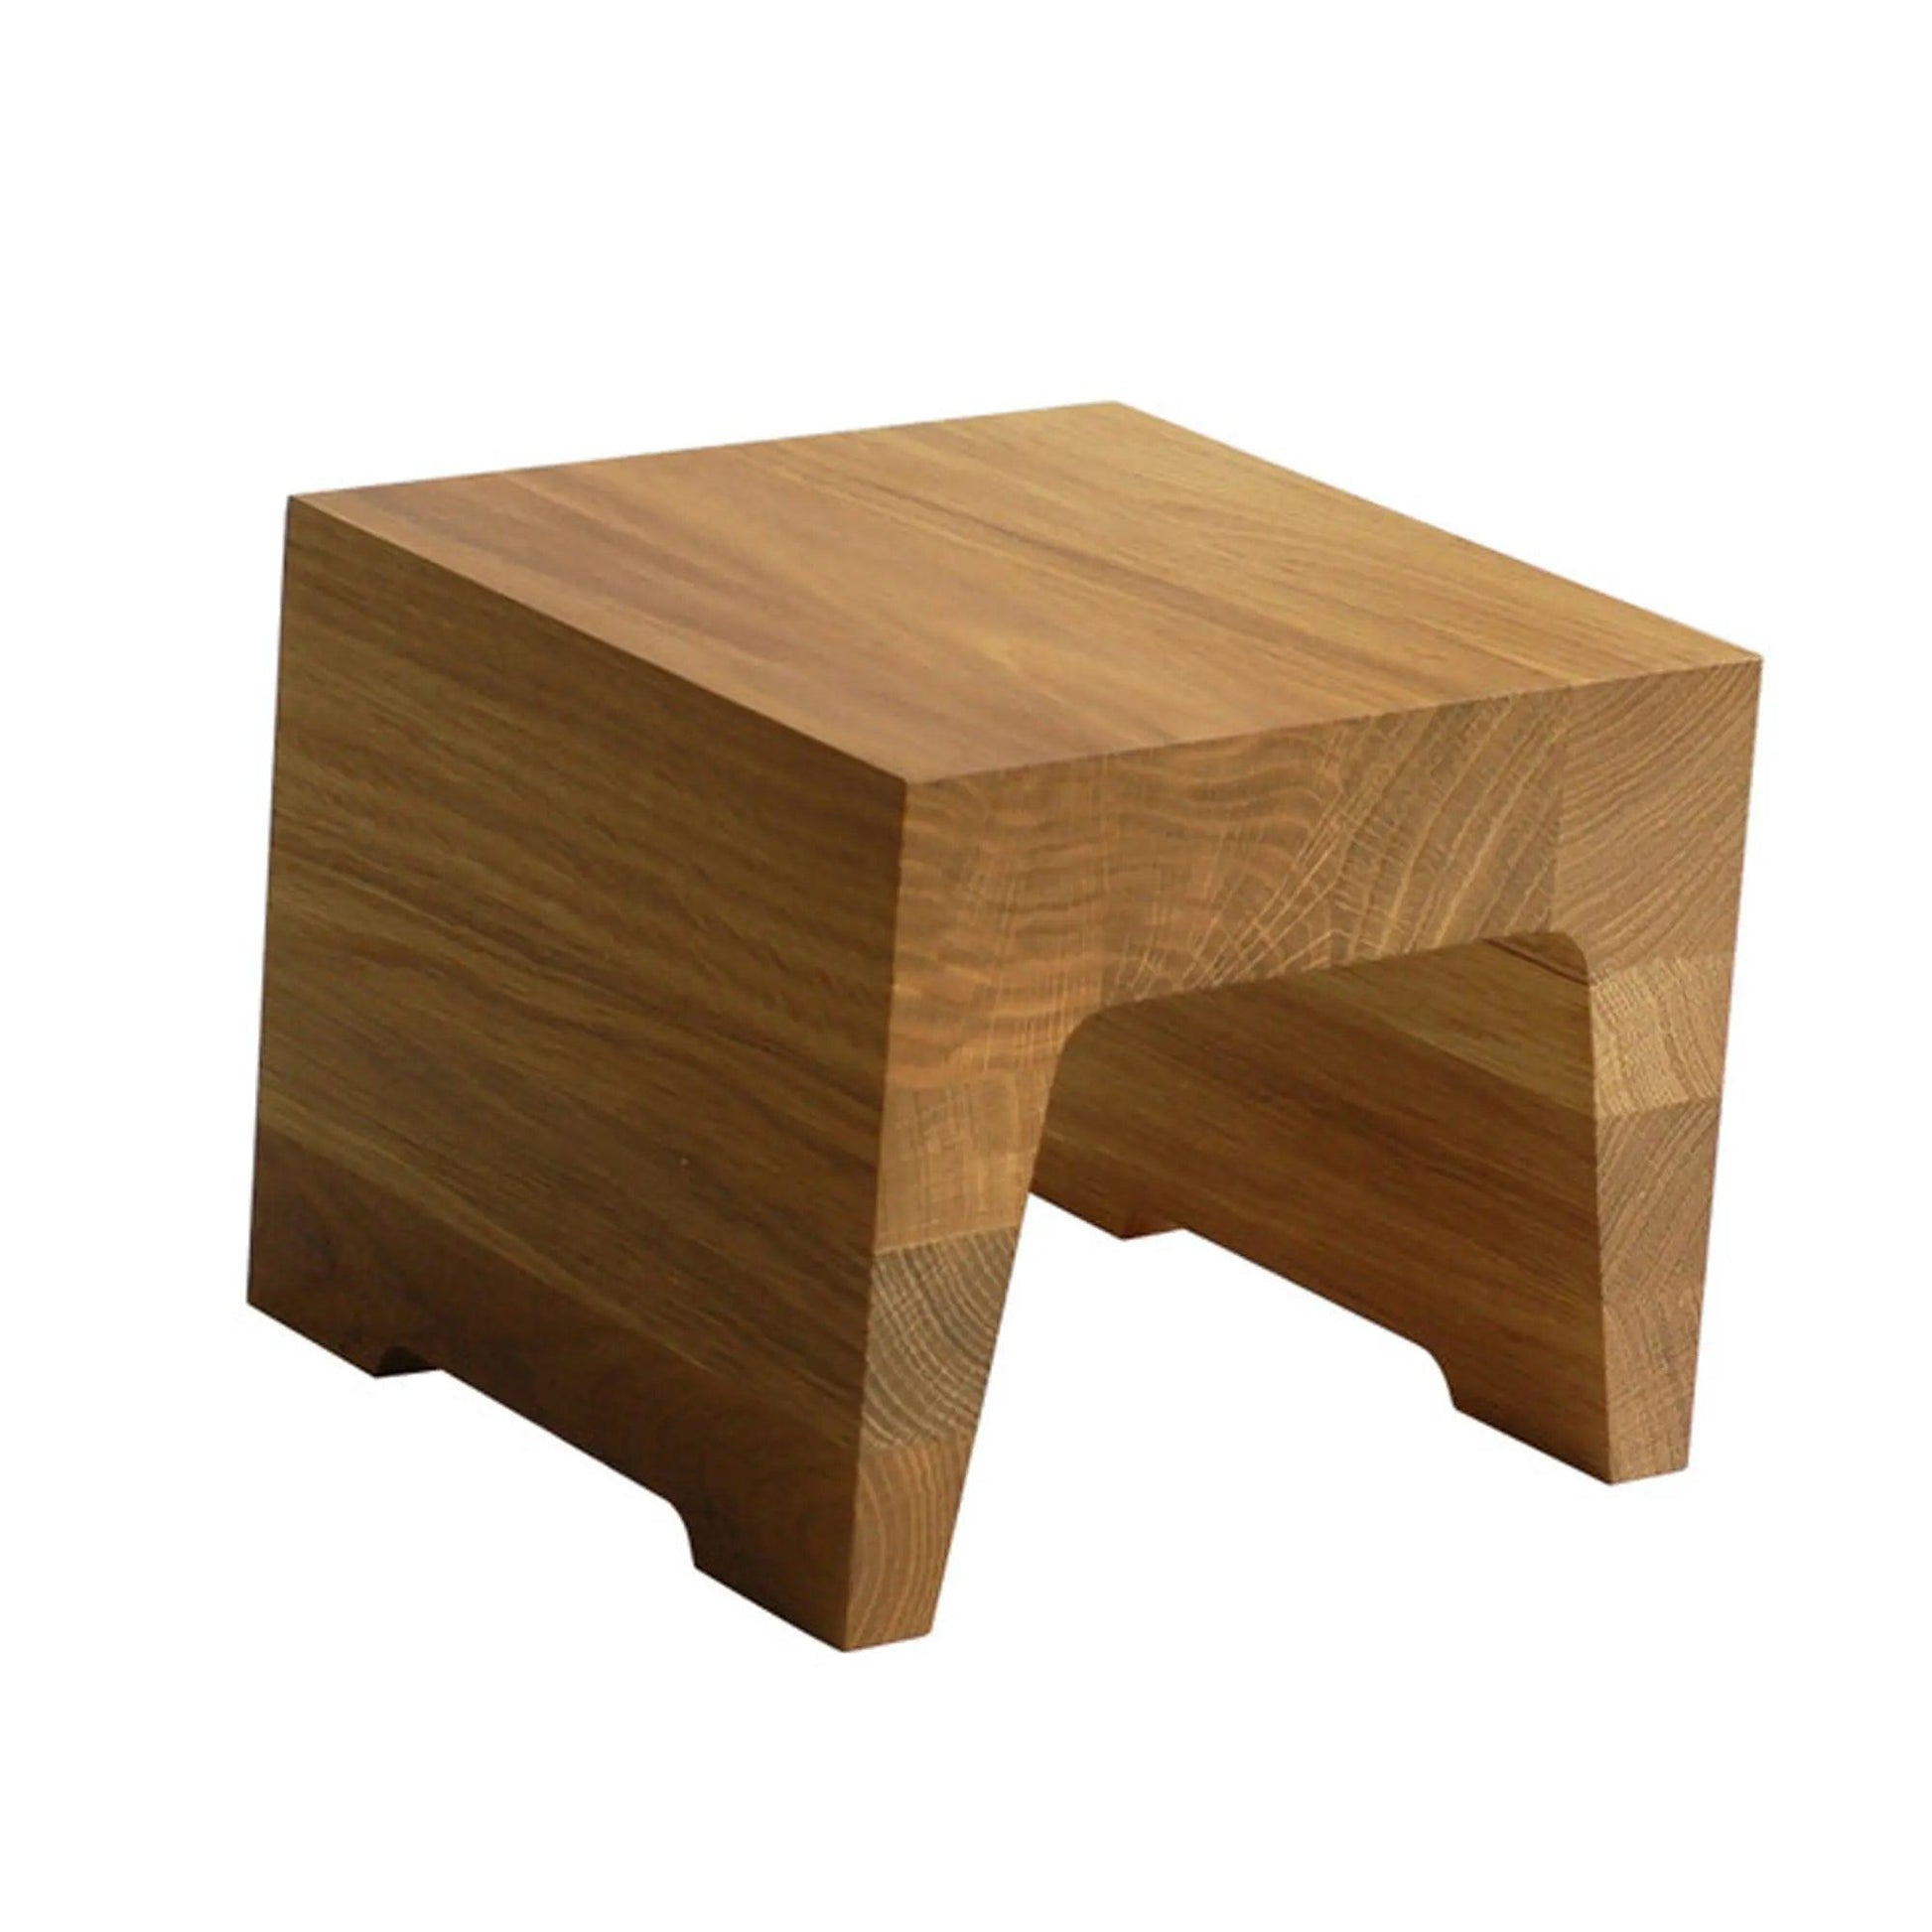 Wundermaxx Wooden Riser, Oak L 21 x W 21 x H 17 cm, Each